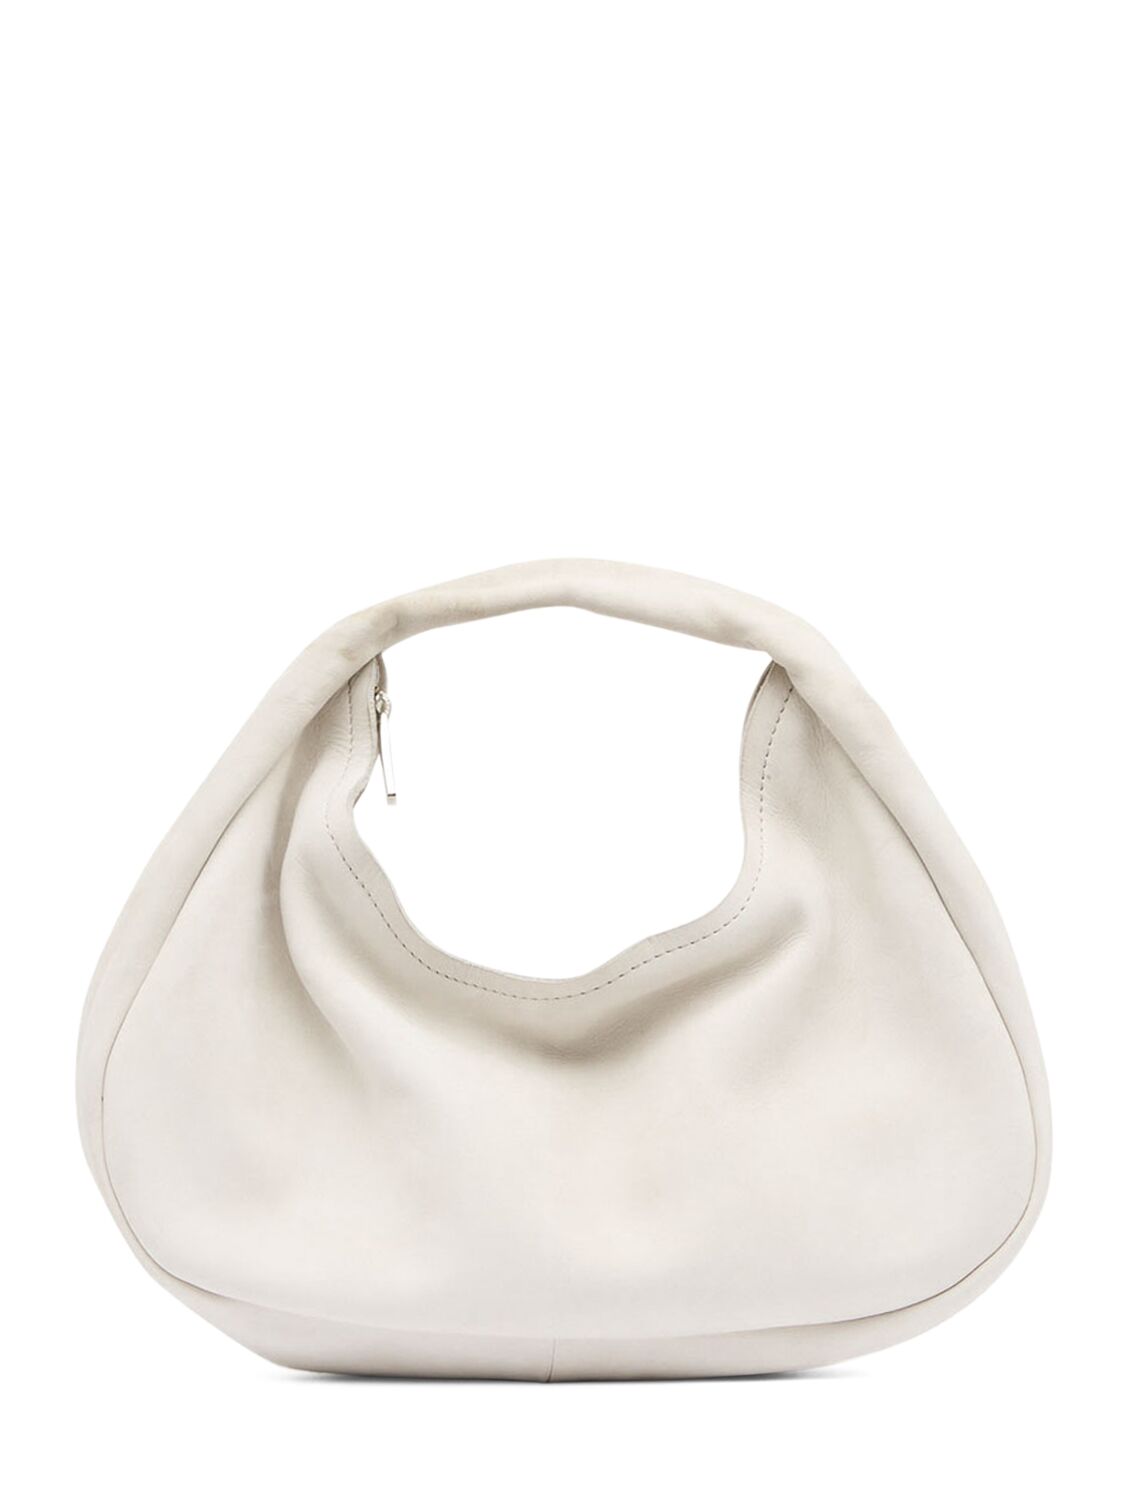 St.agni Lvr Exclusive Bon Bon Leather Bag In Cool White